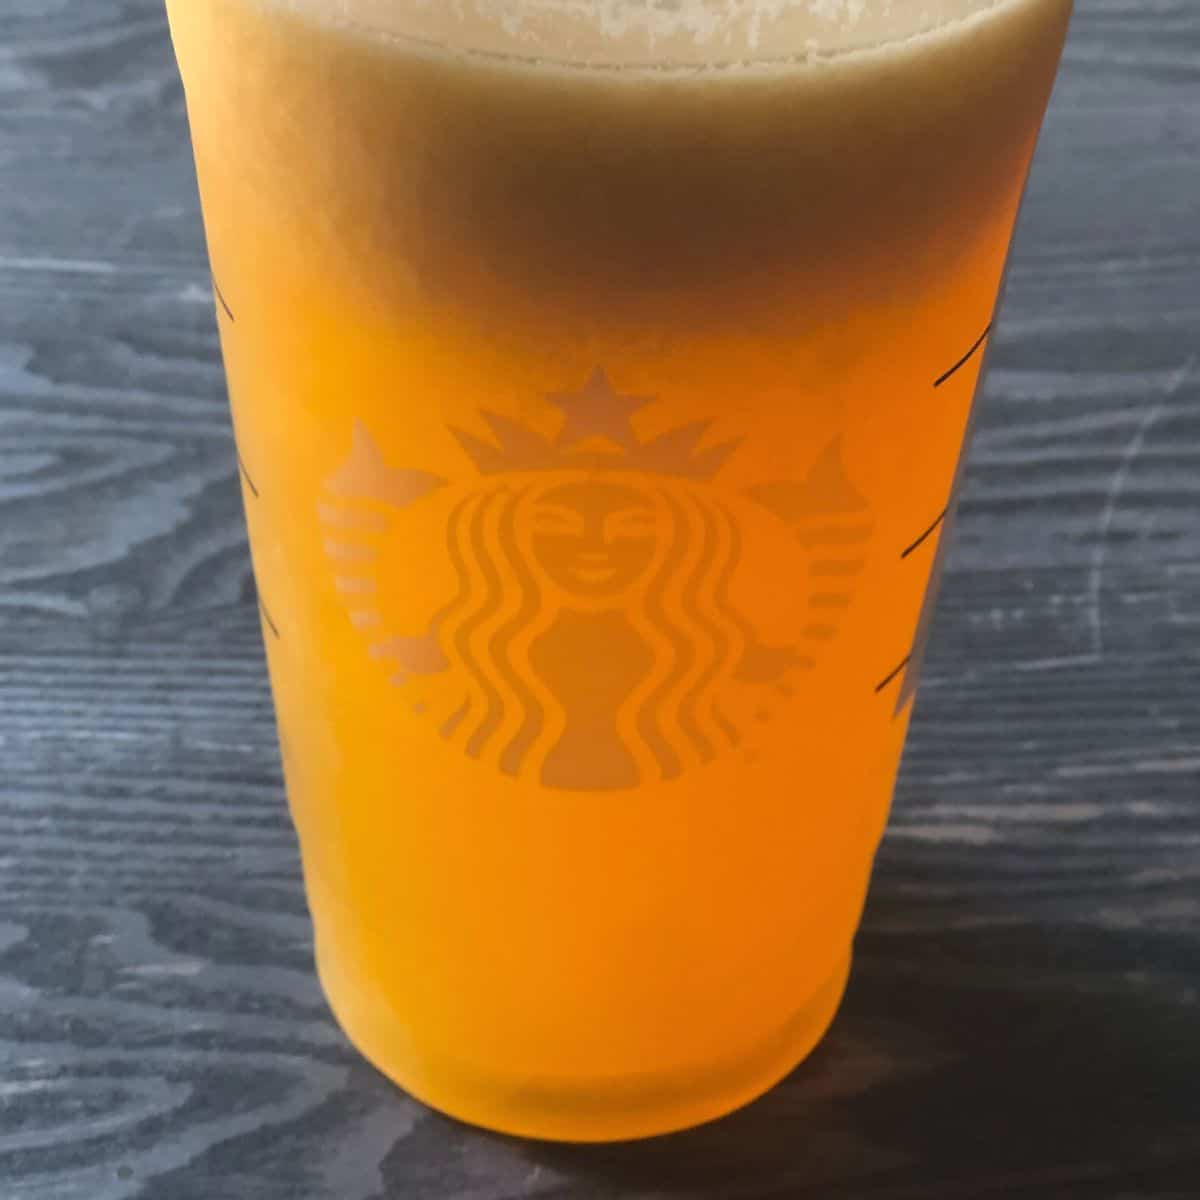 Cold orange Starbucks drink